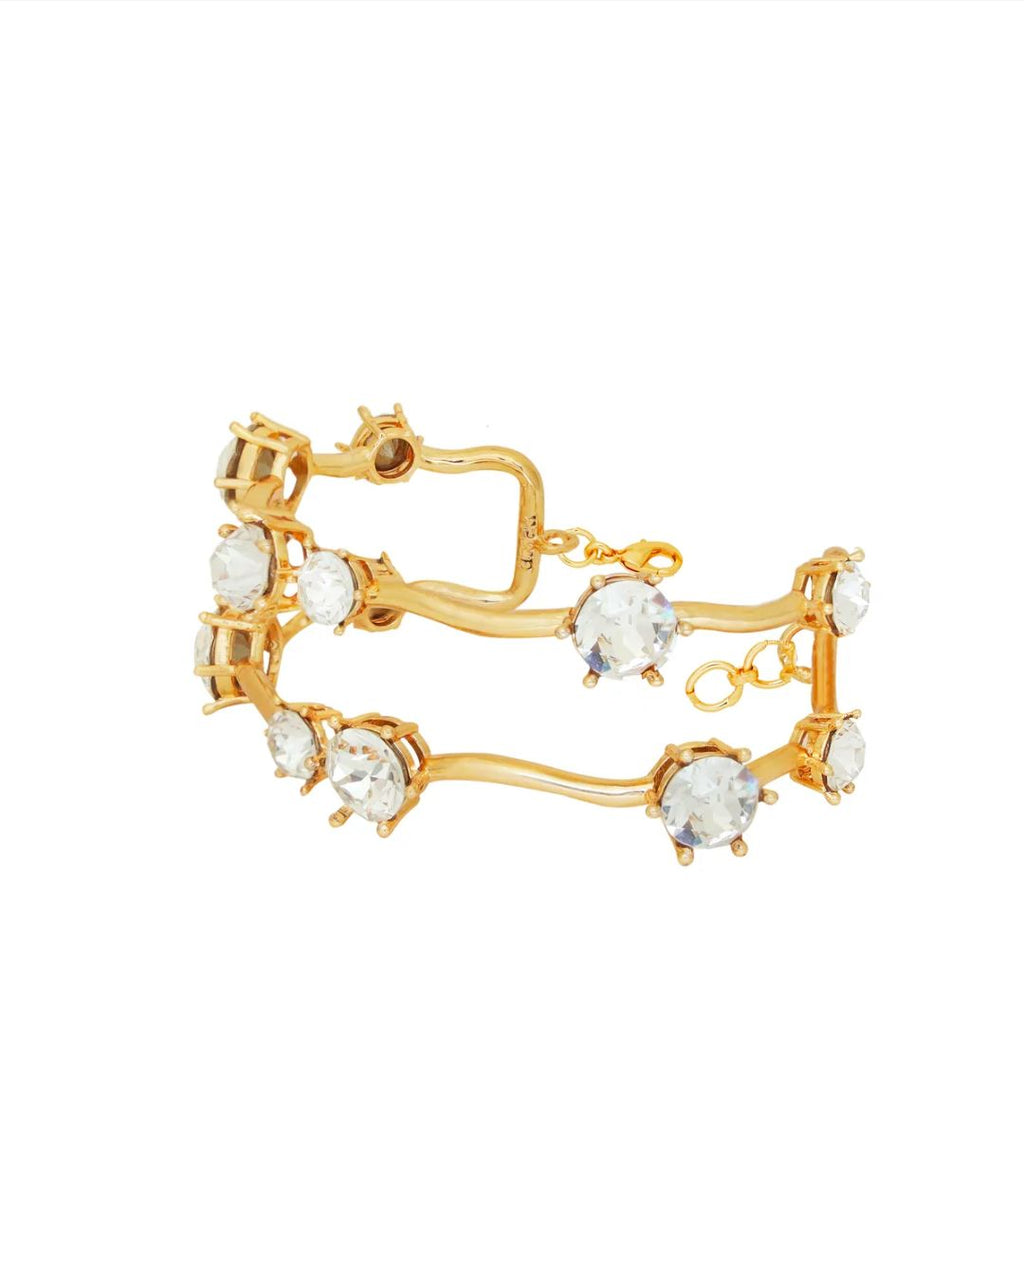 Garnet Bracelet in White - Bracelets & Cuffs - Handcrafted Jewellery - Made in India - Dubai Jewellery, Fashion & Lifestyle - Dori